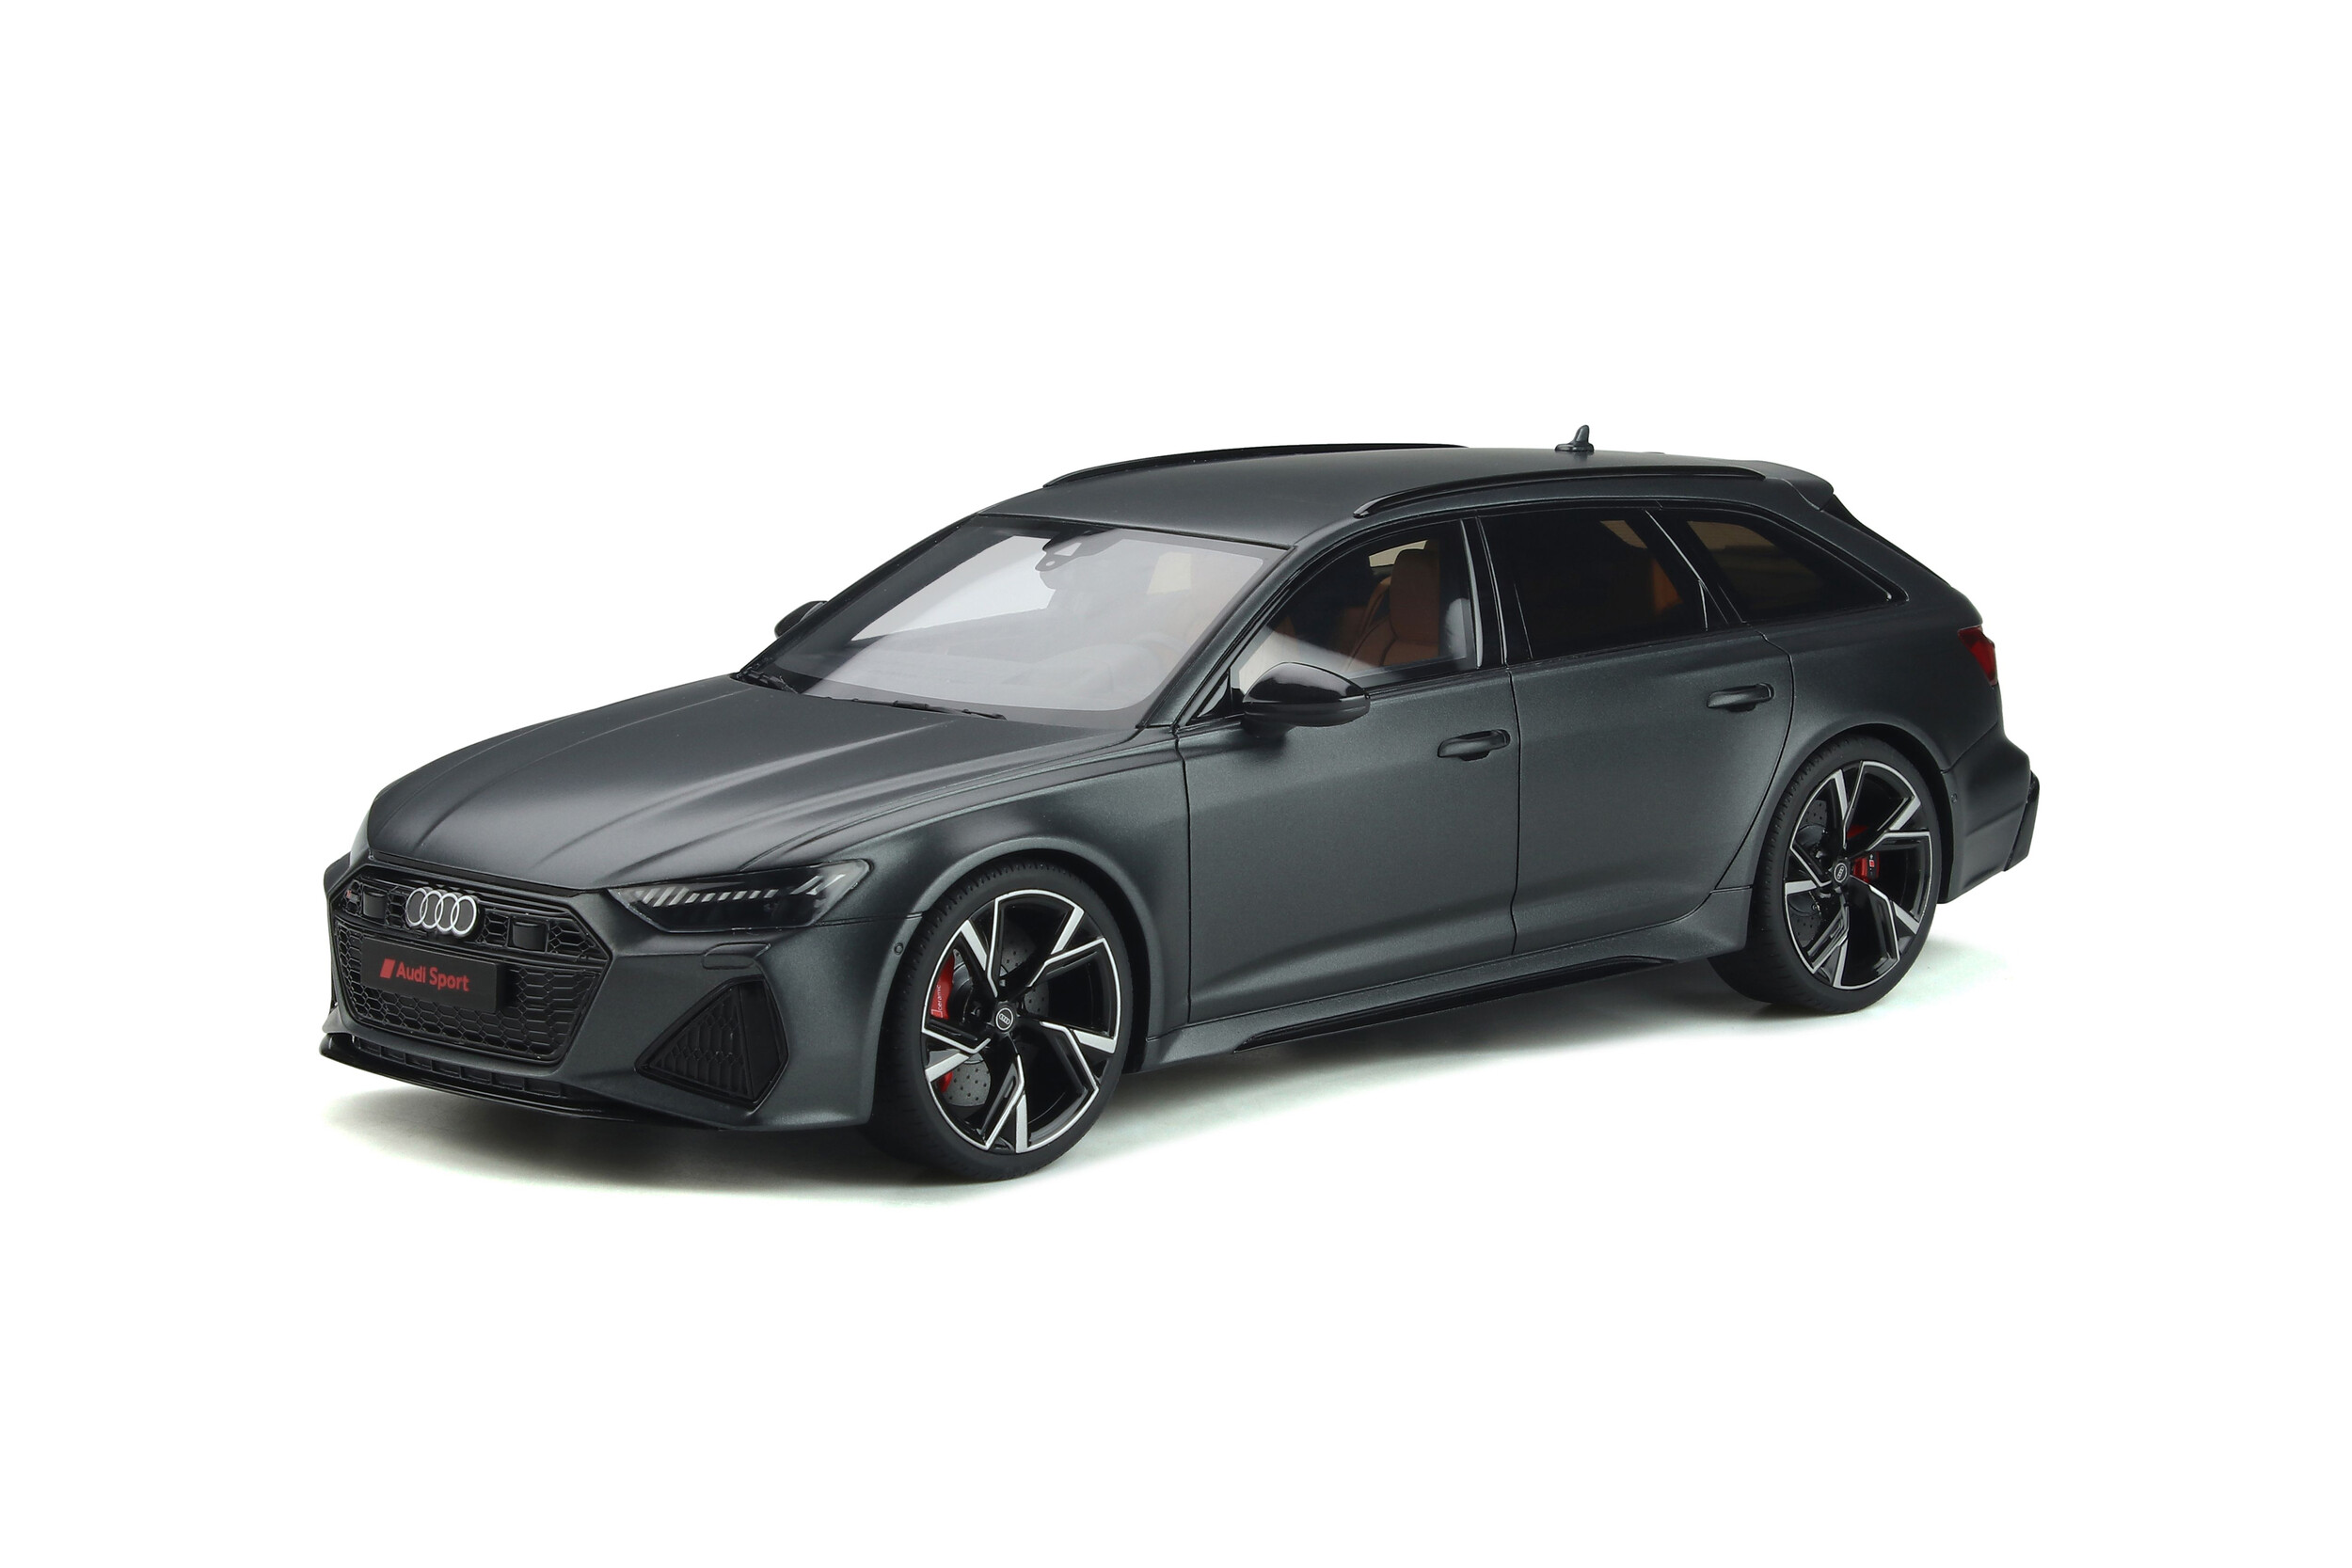 Voiture Miniature Audi RS6 1/18 - VIPRS6BL VIP MODELS